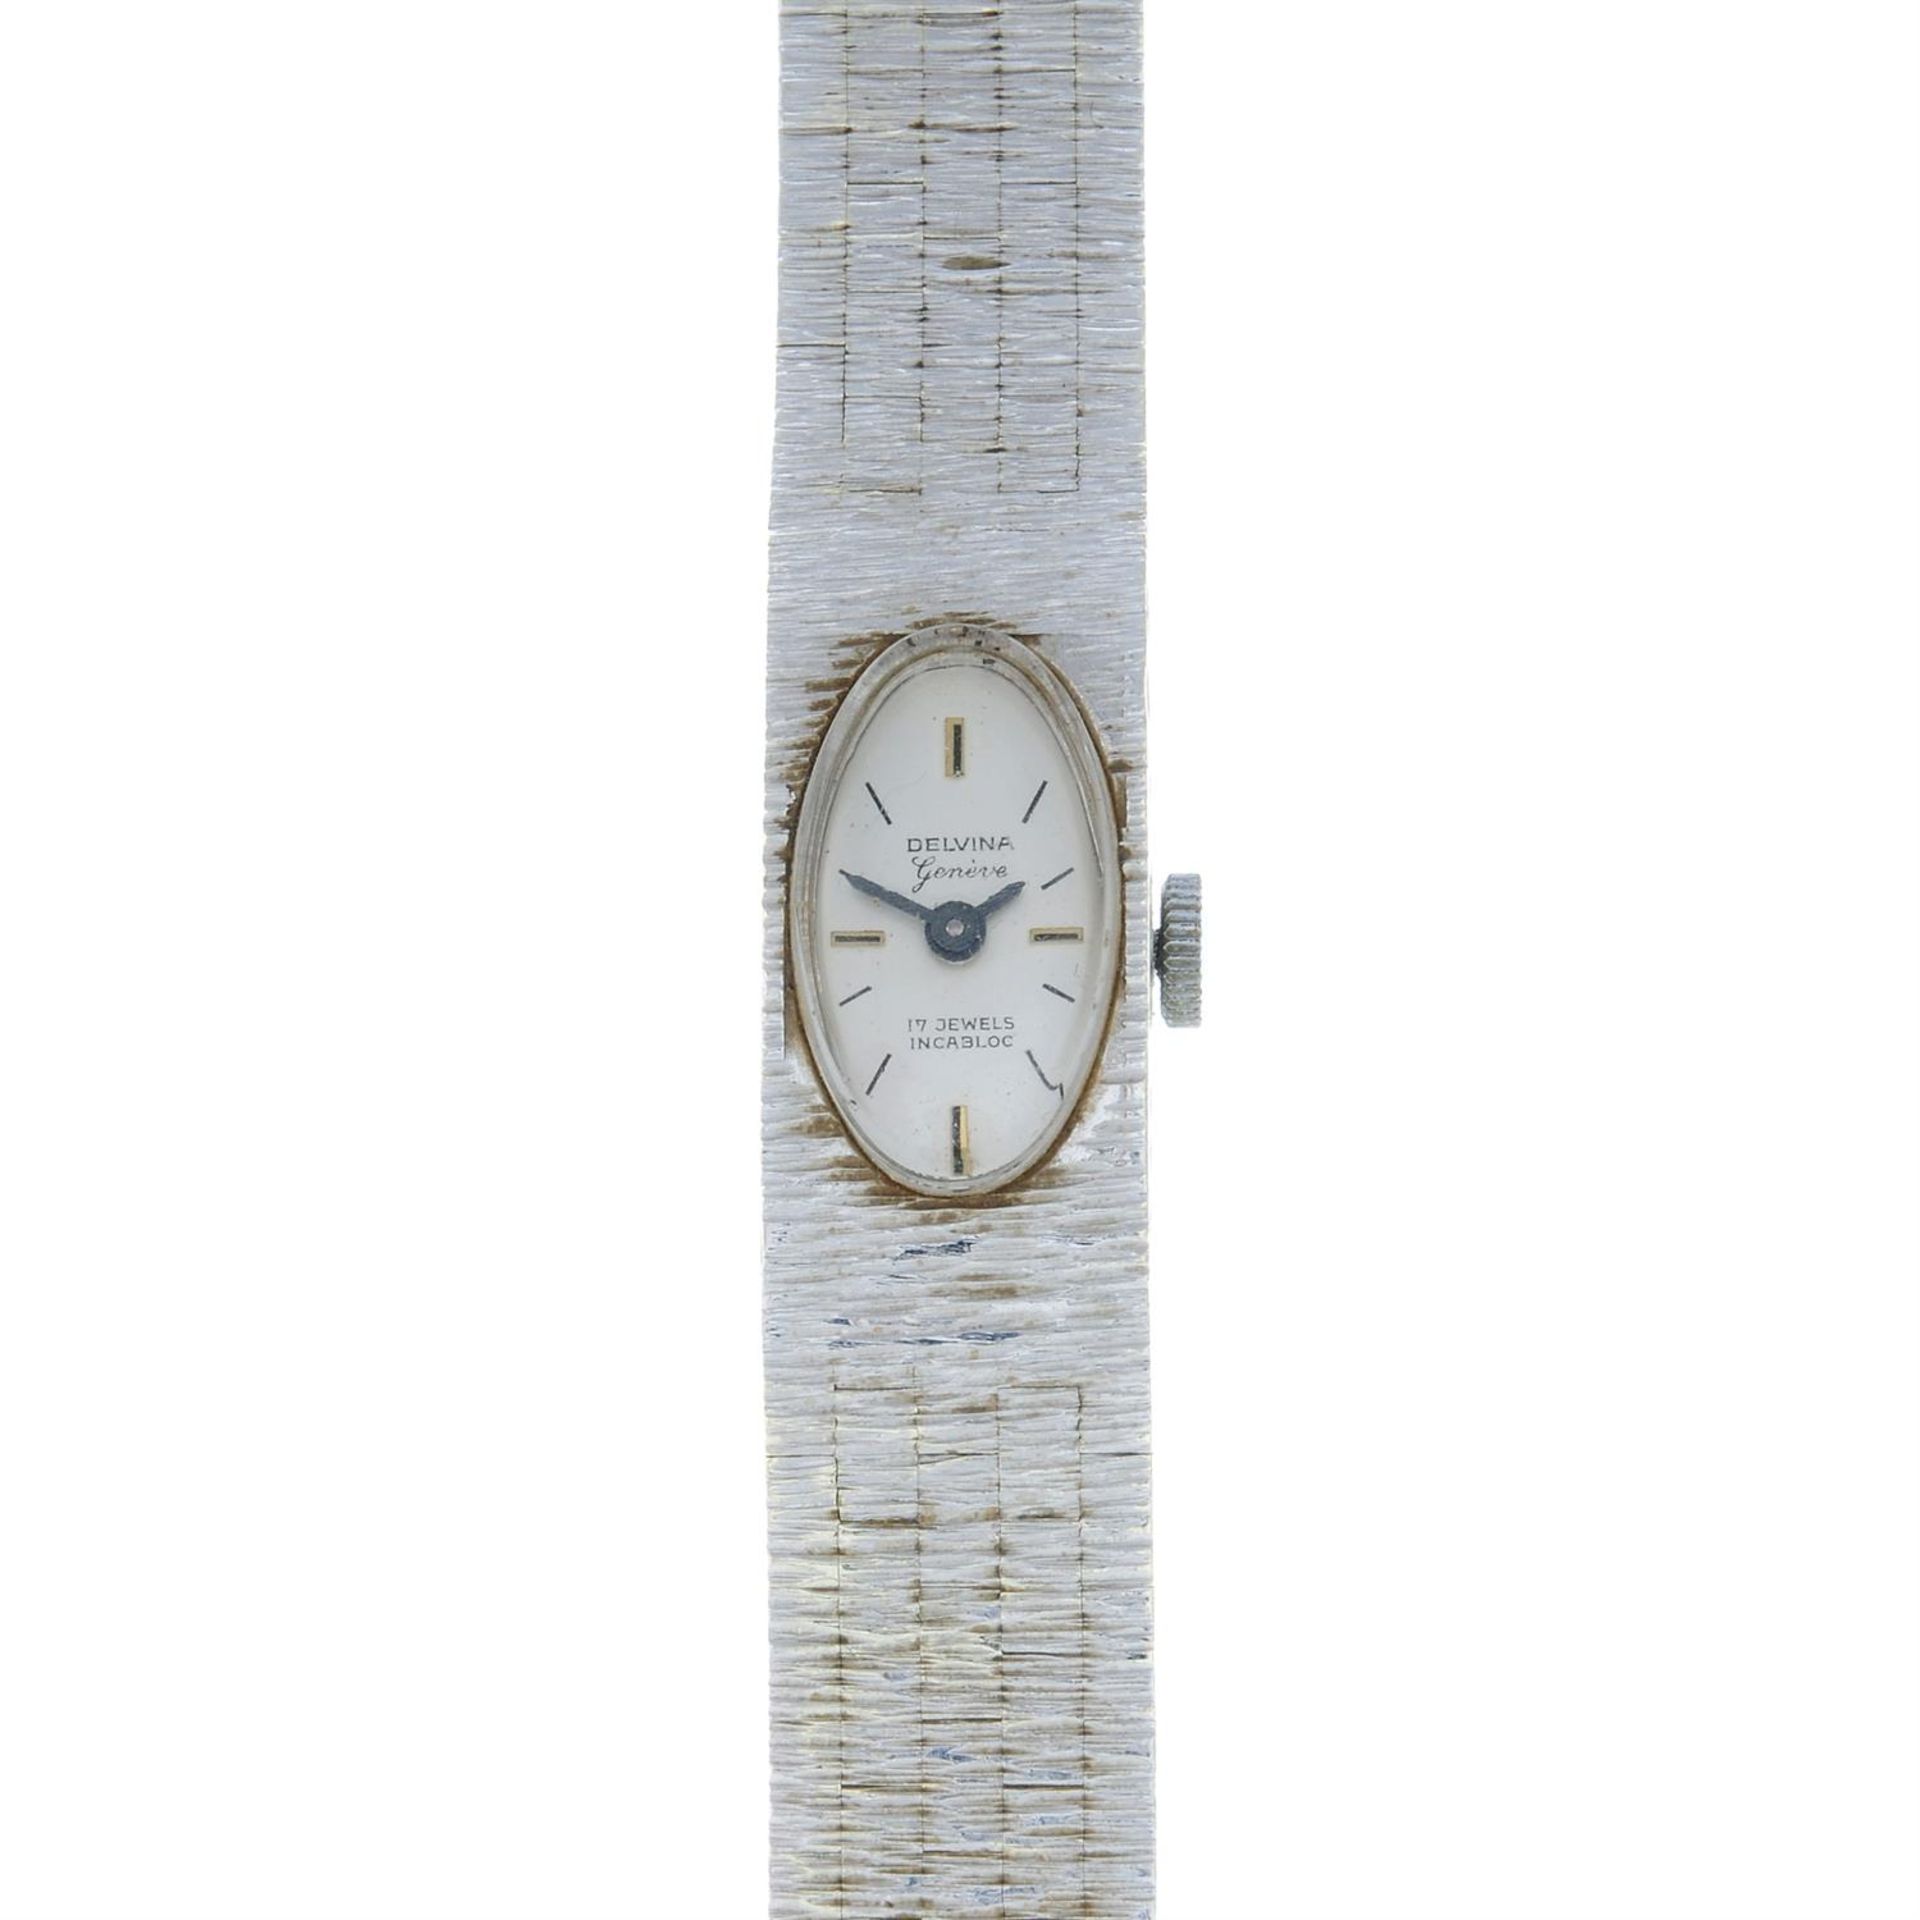 A lady's 1970s 9ct gold wristwatch.